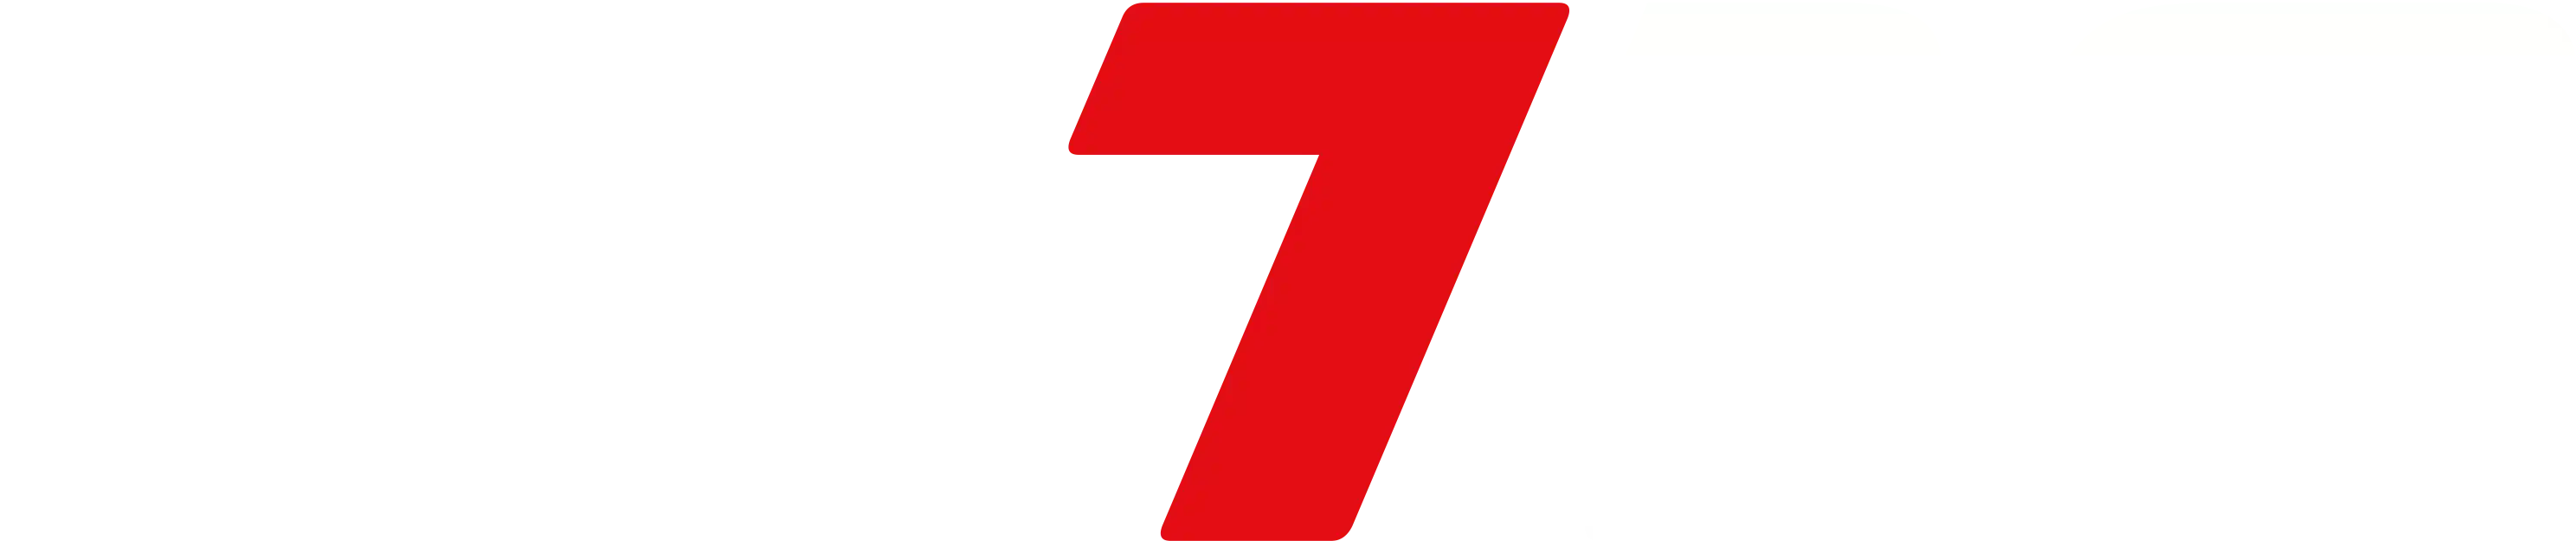 ultra - logo